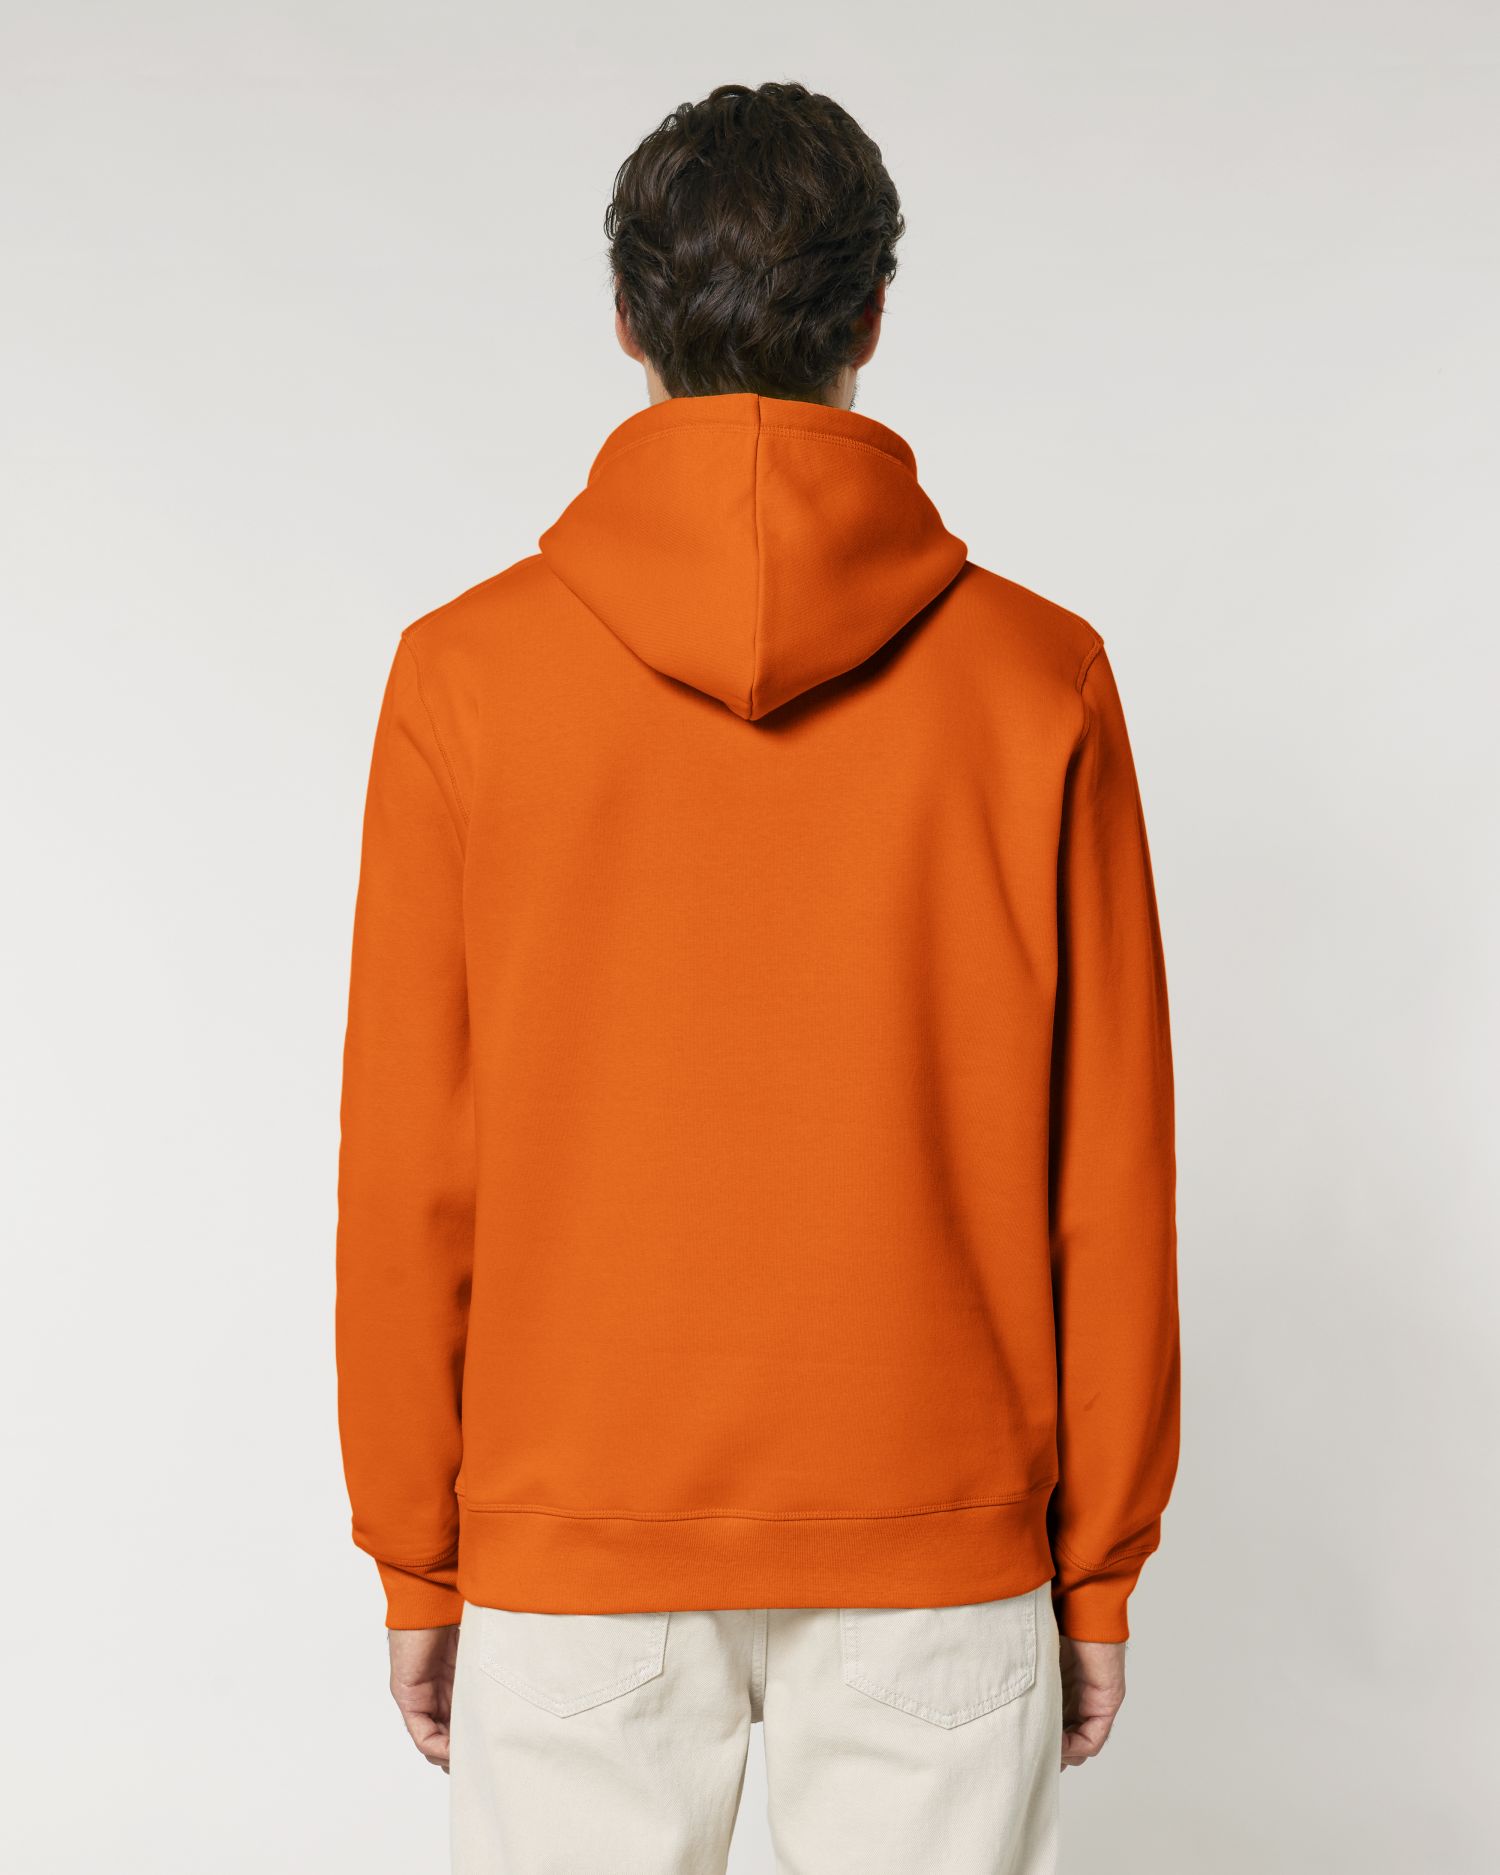 Hoodie sweatshirts Drummer 2.0 in Farbe Bright Orange